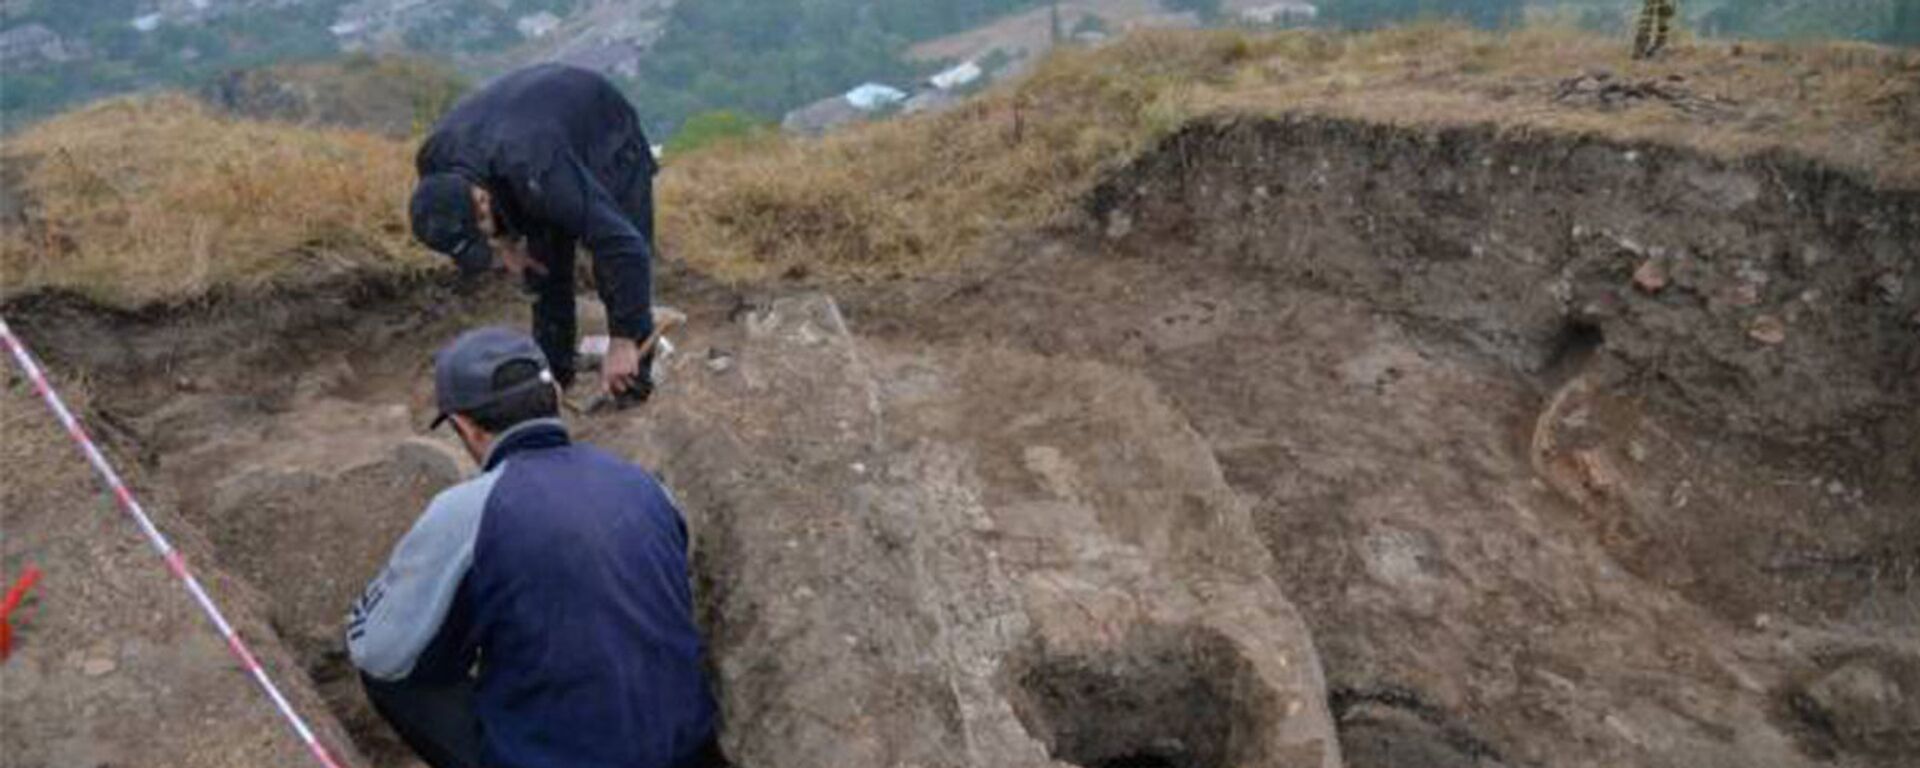 Археологические раскопки на территории крепости Тавуш в Берде - Sputnik Армения, 1920, 26.07.2021